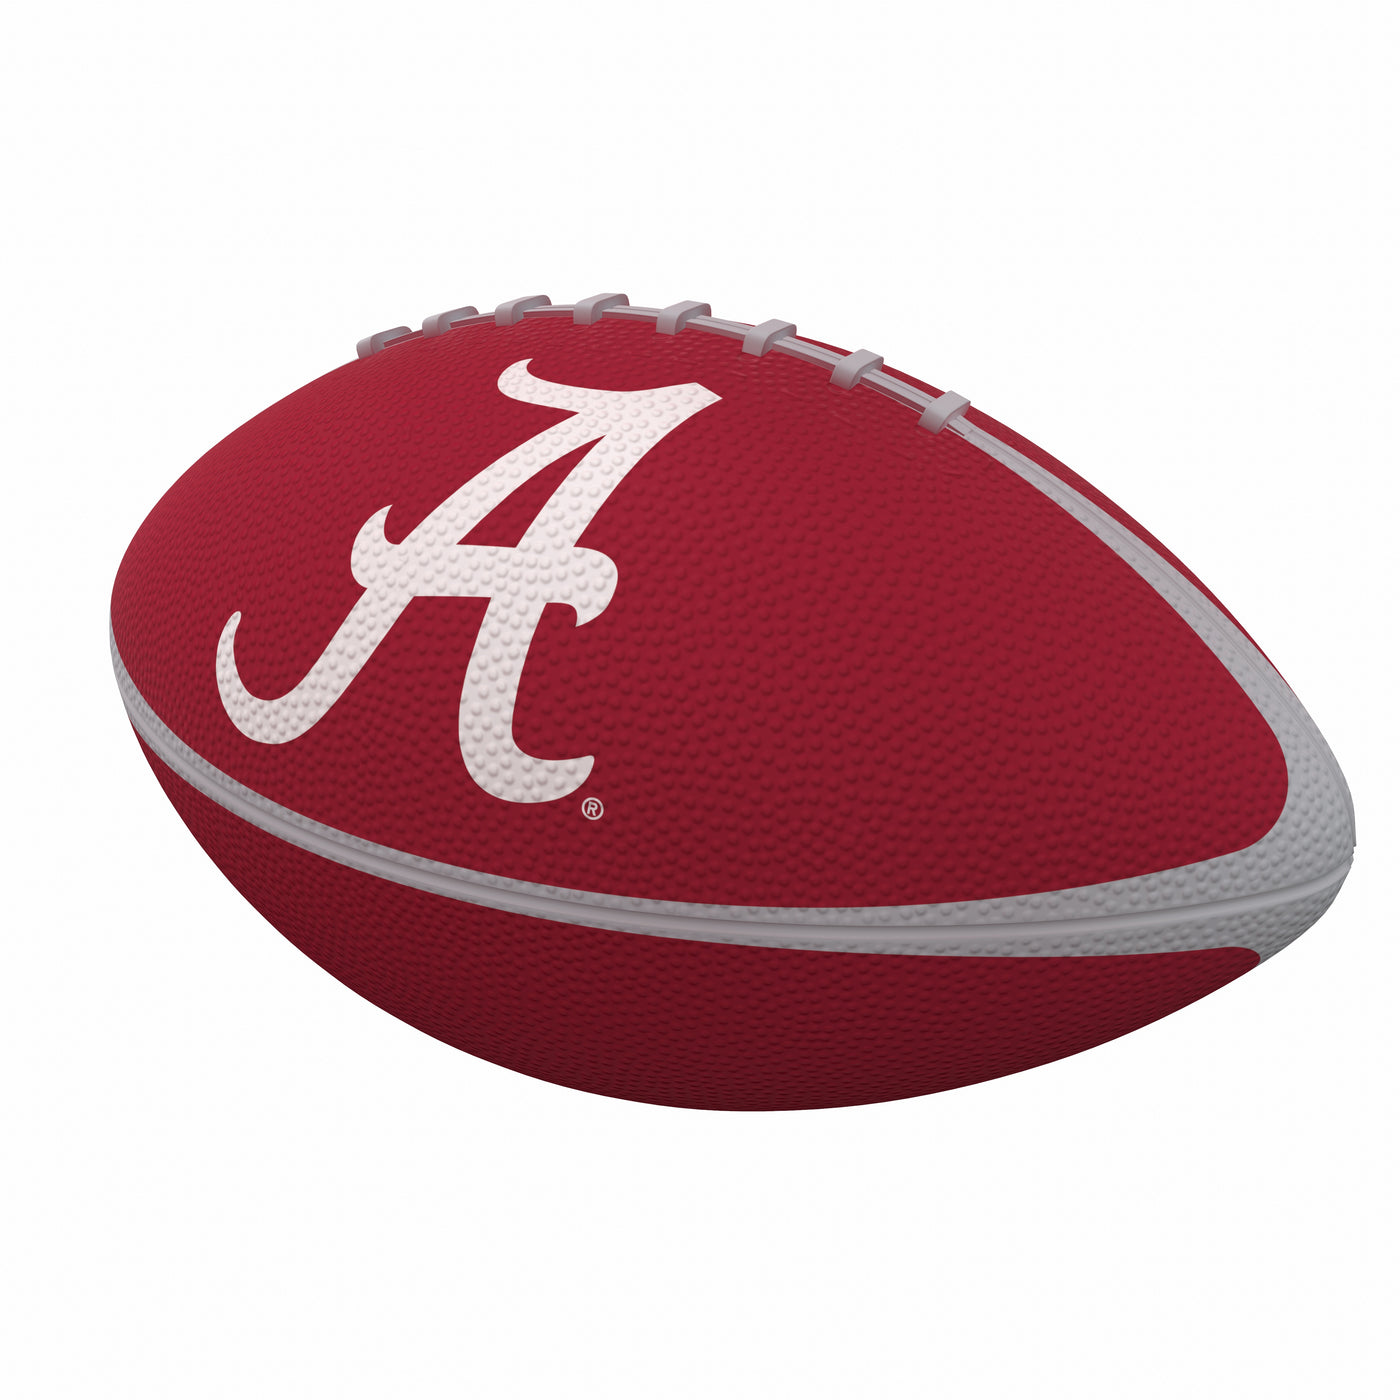 Alabama Pinwheel Junior-Size Rubber Football